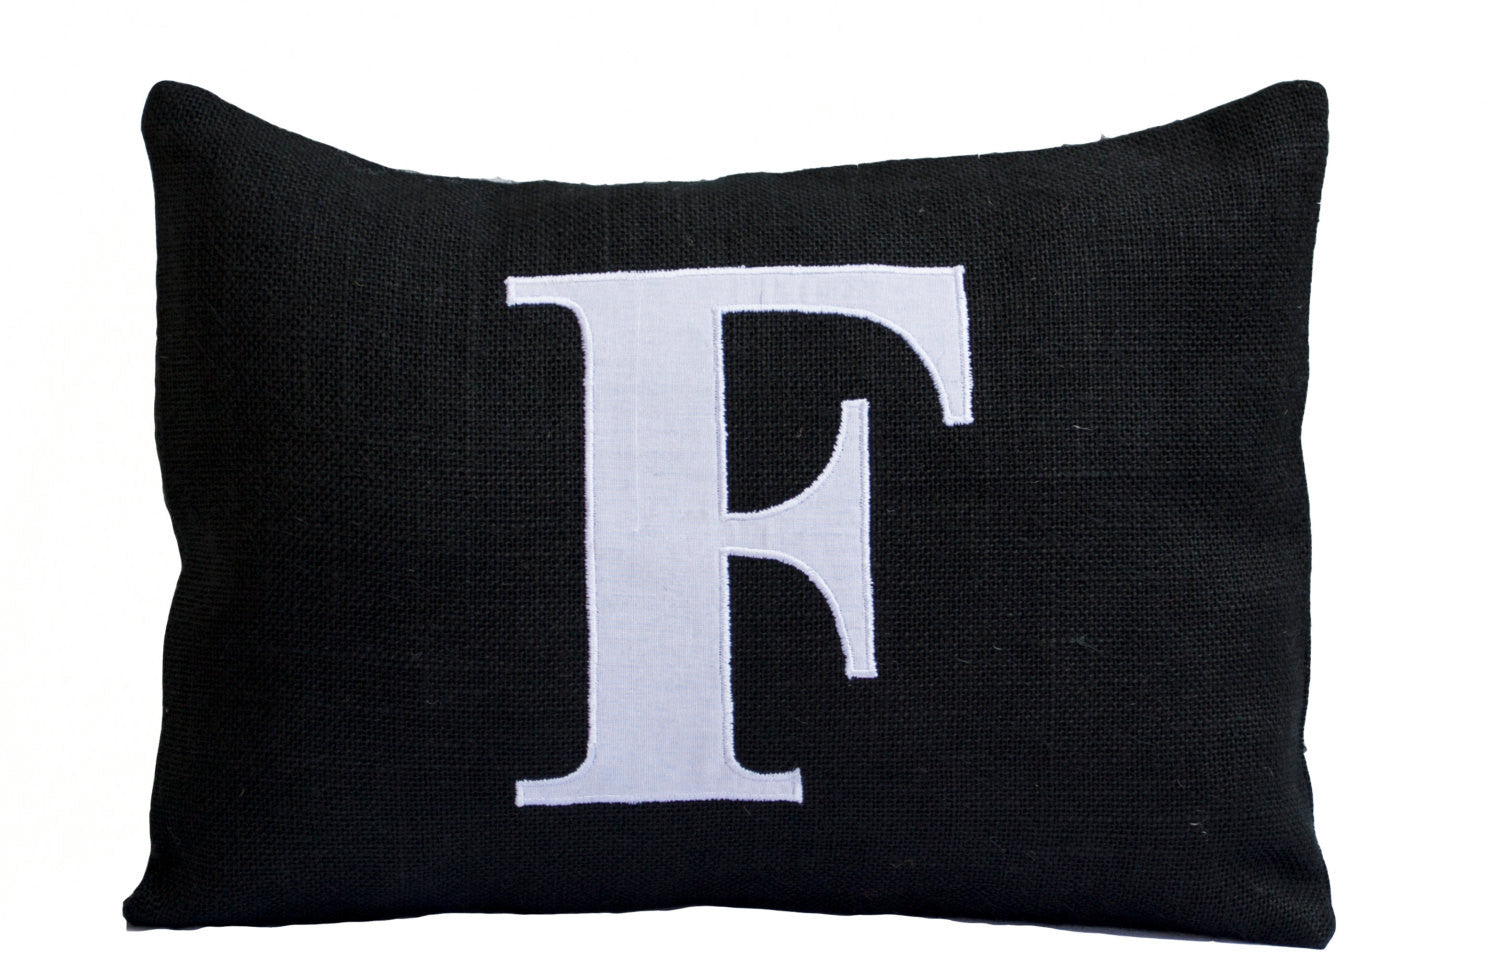 Handmade black white monogrammed throw pillows